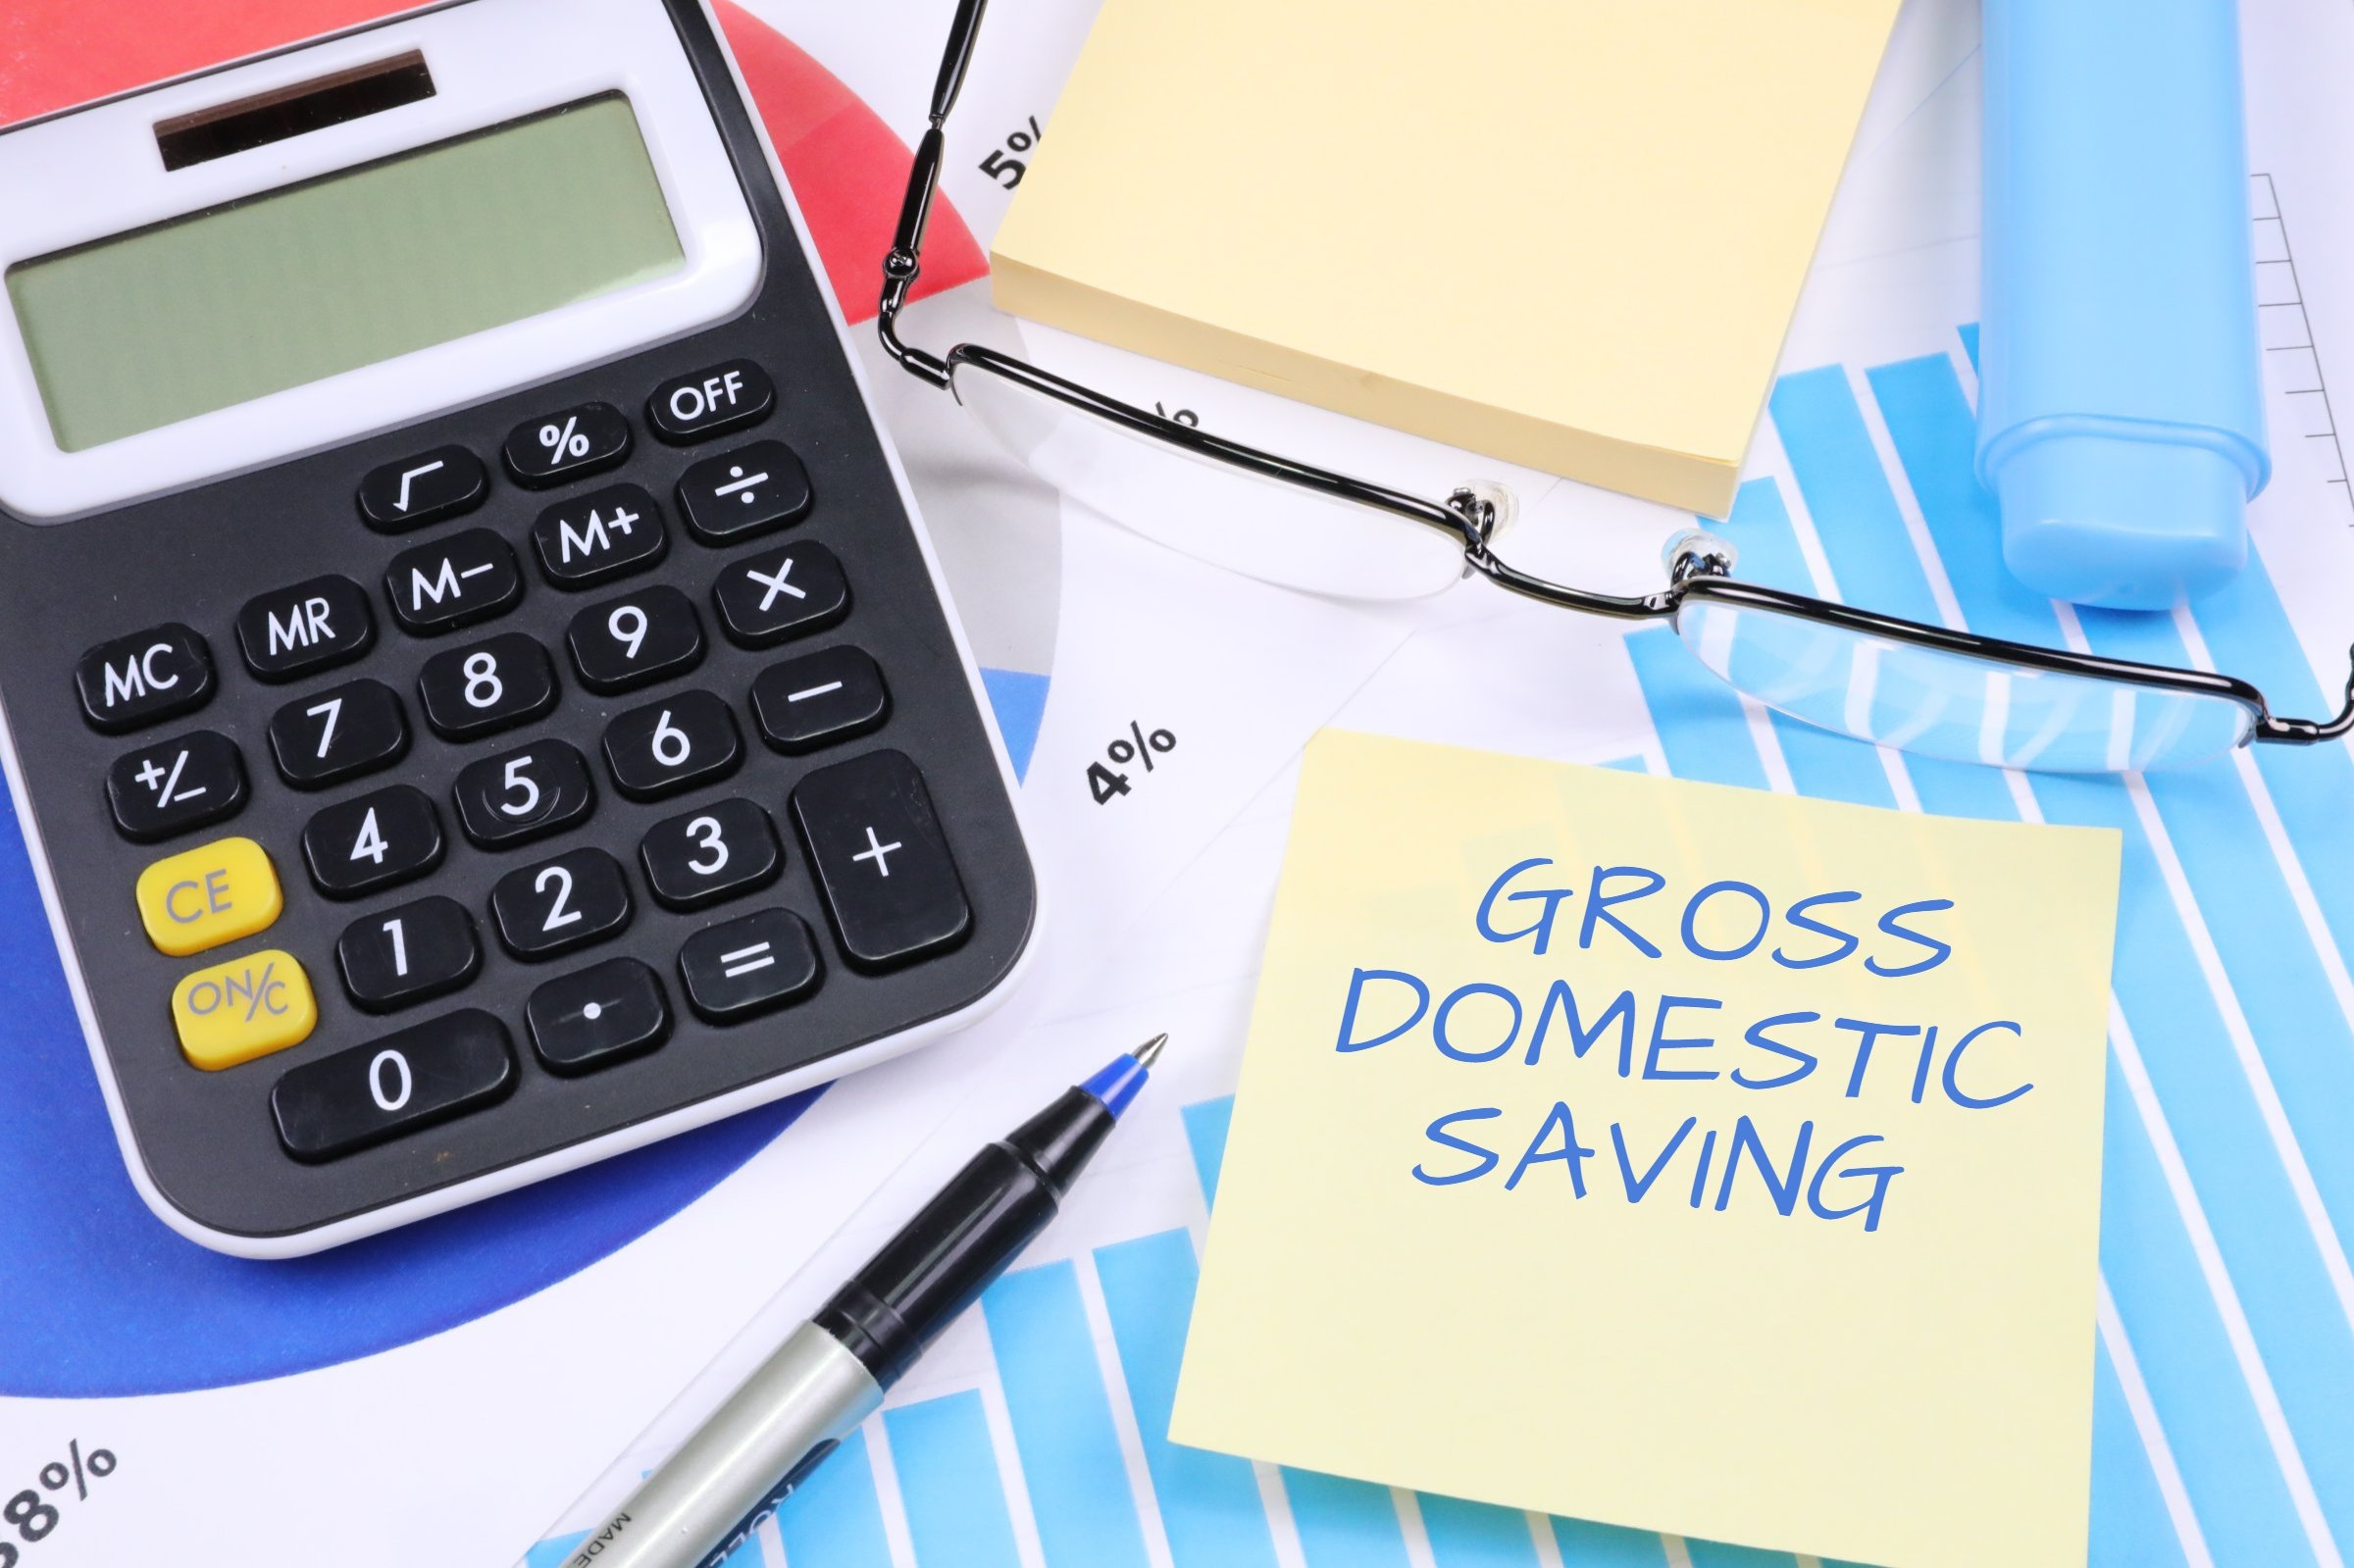 Gross Domestic Saving